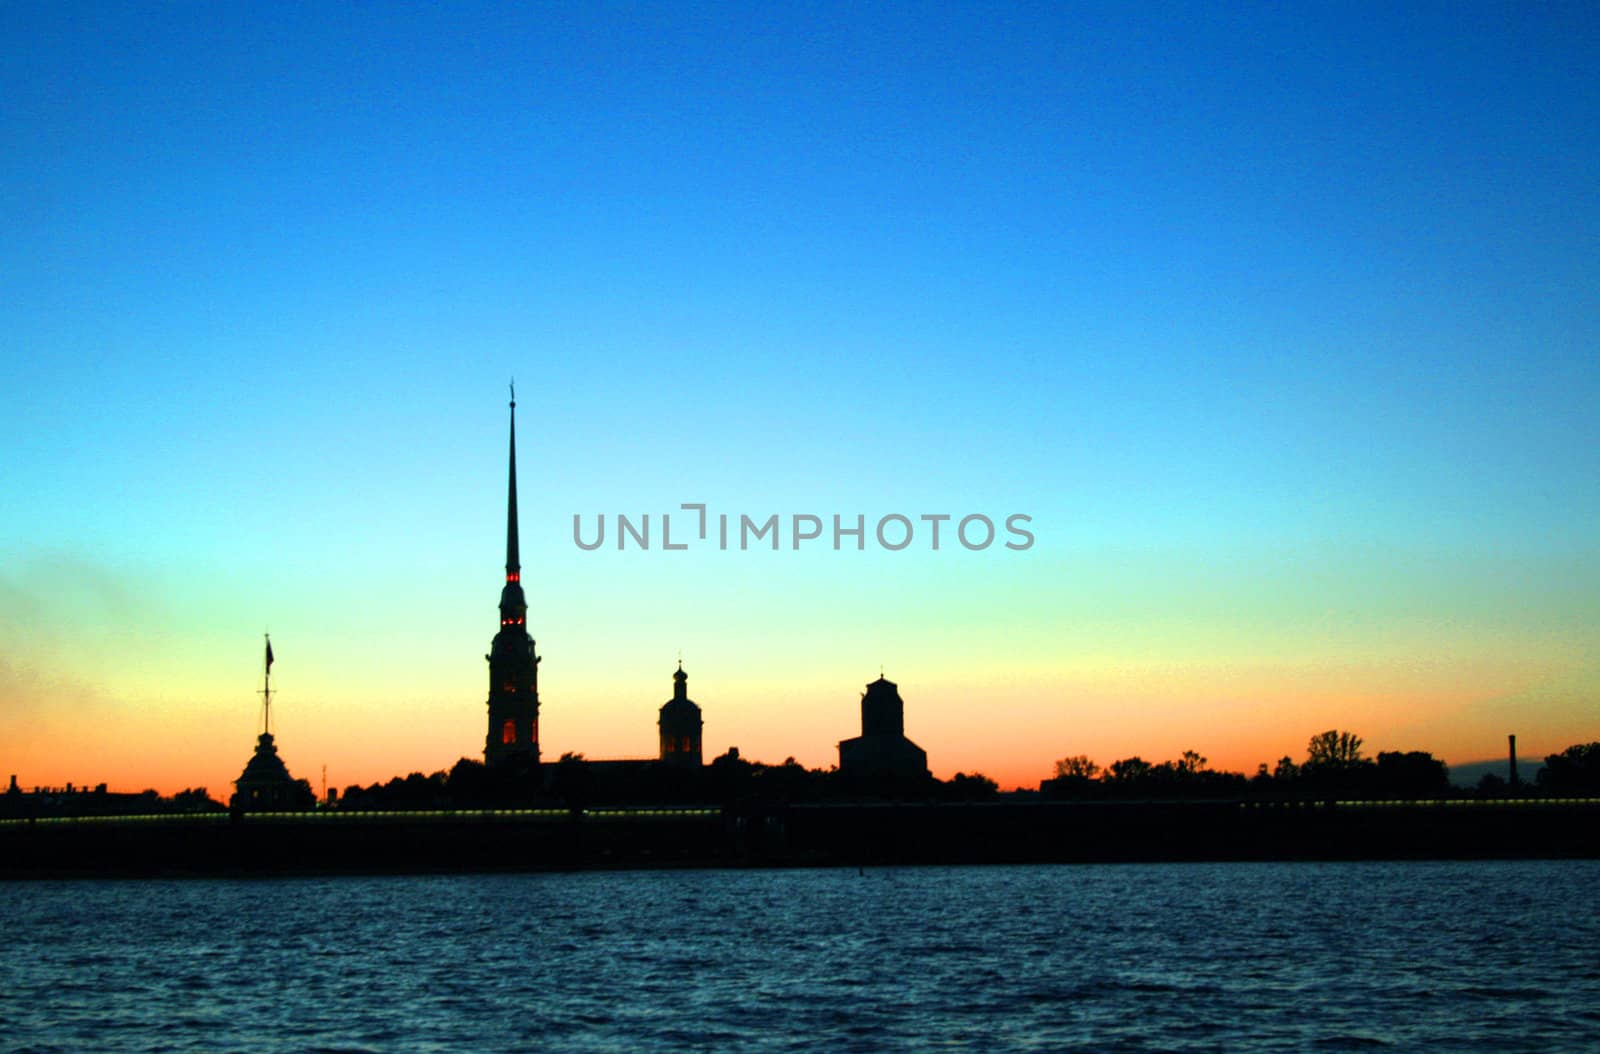 Saint-Petersburg. White Nights.
My other pictures of Saint Petersburg.